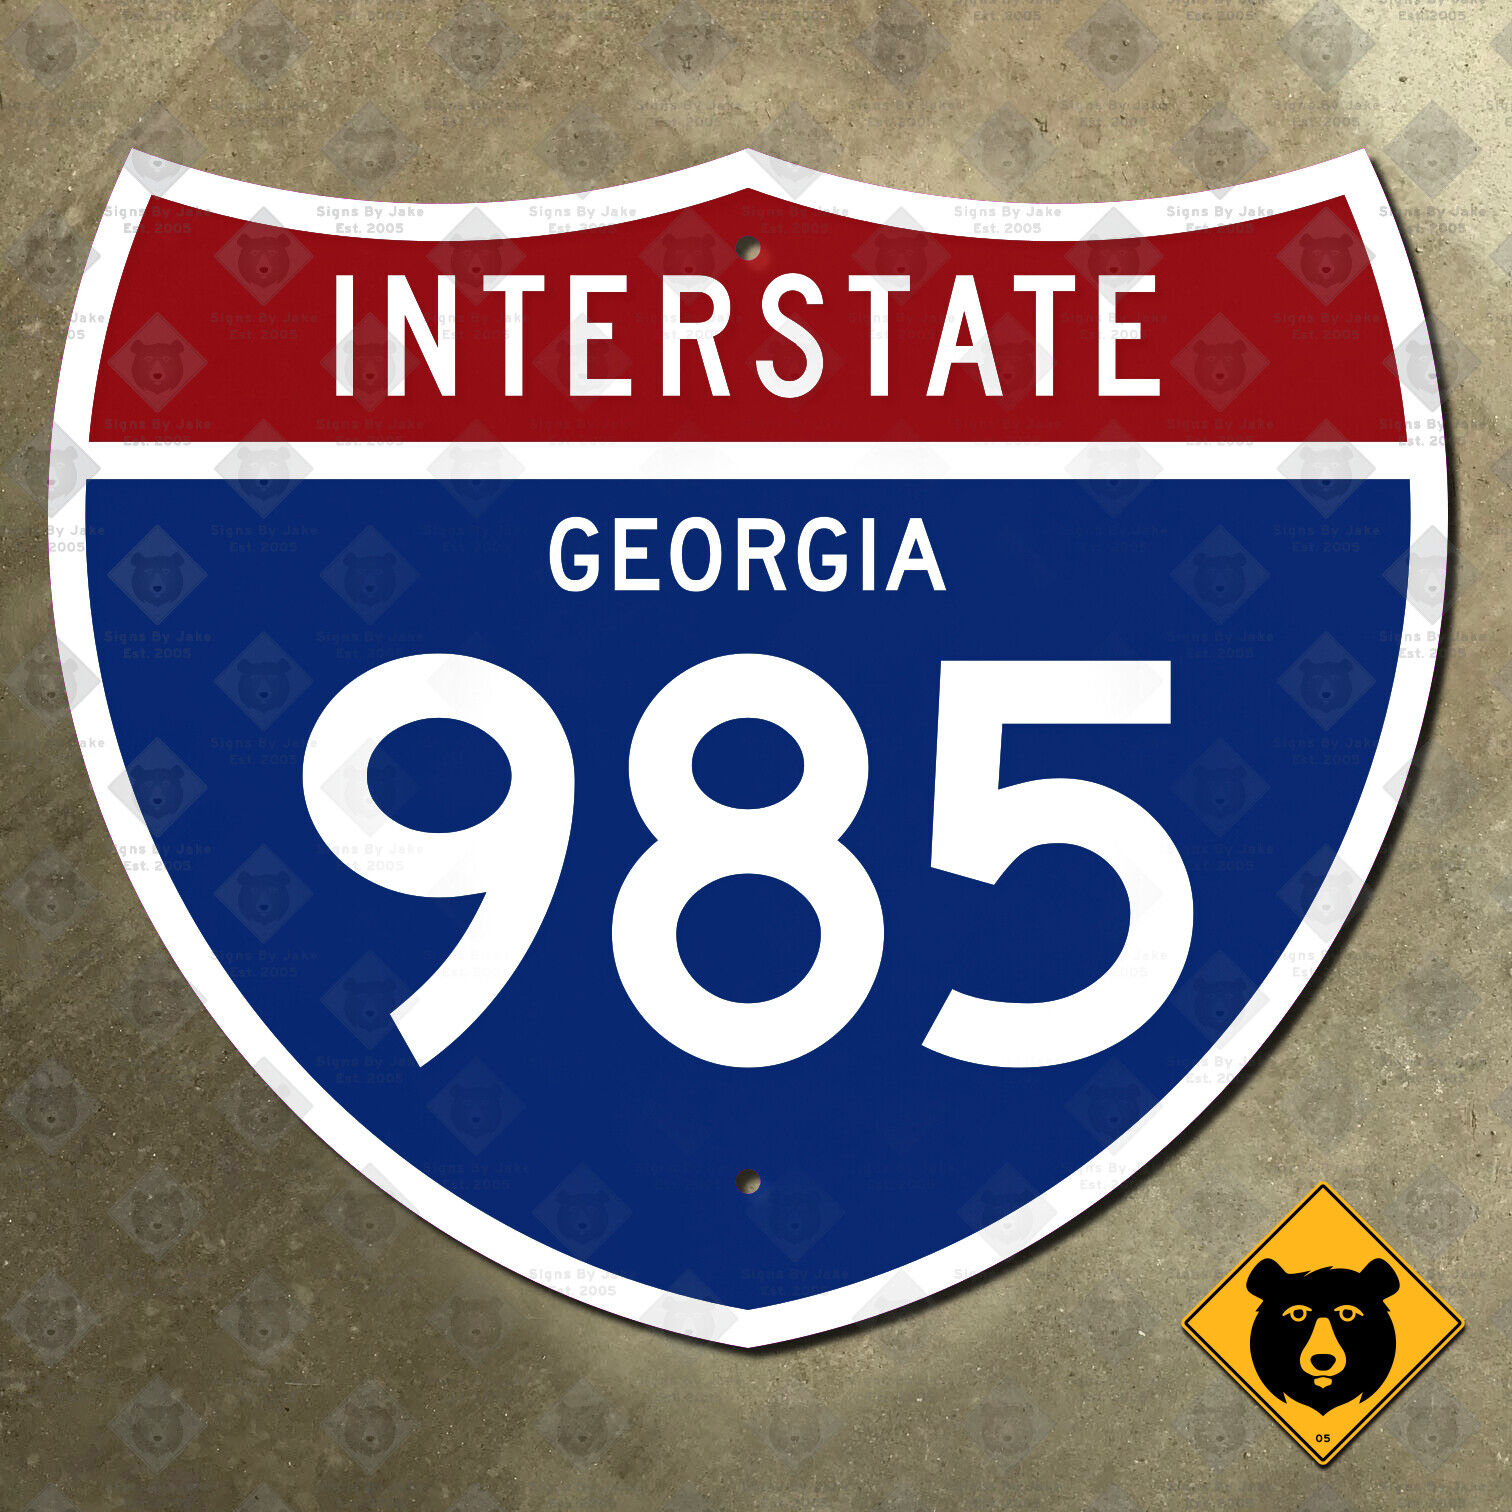 Georgia Interstate 985 route highway road sign Gainesville Suwanee 1961 12x10